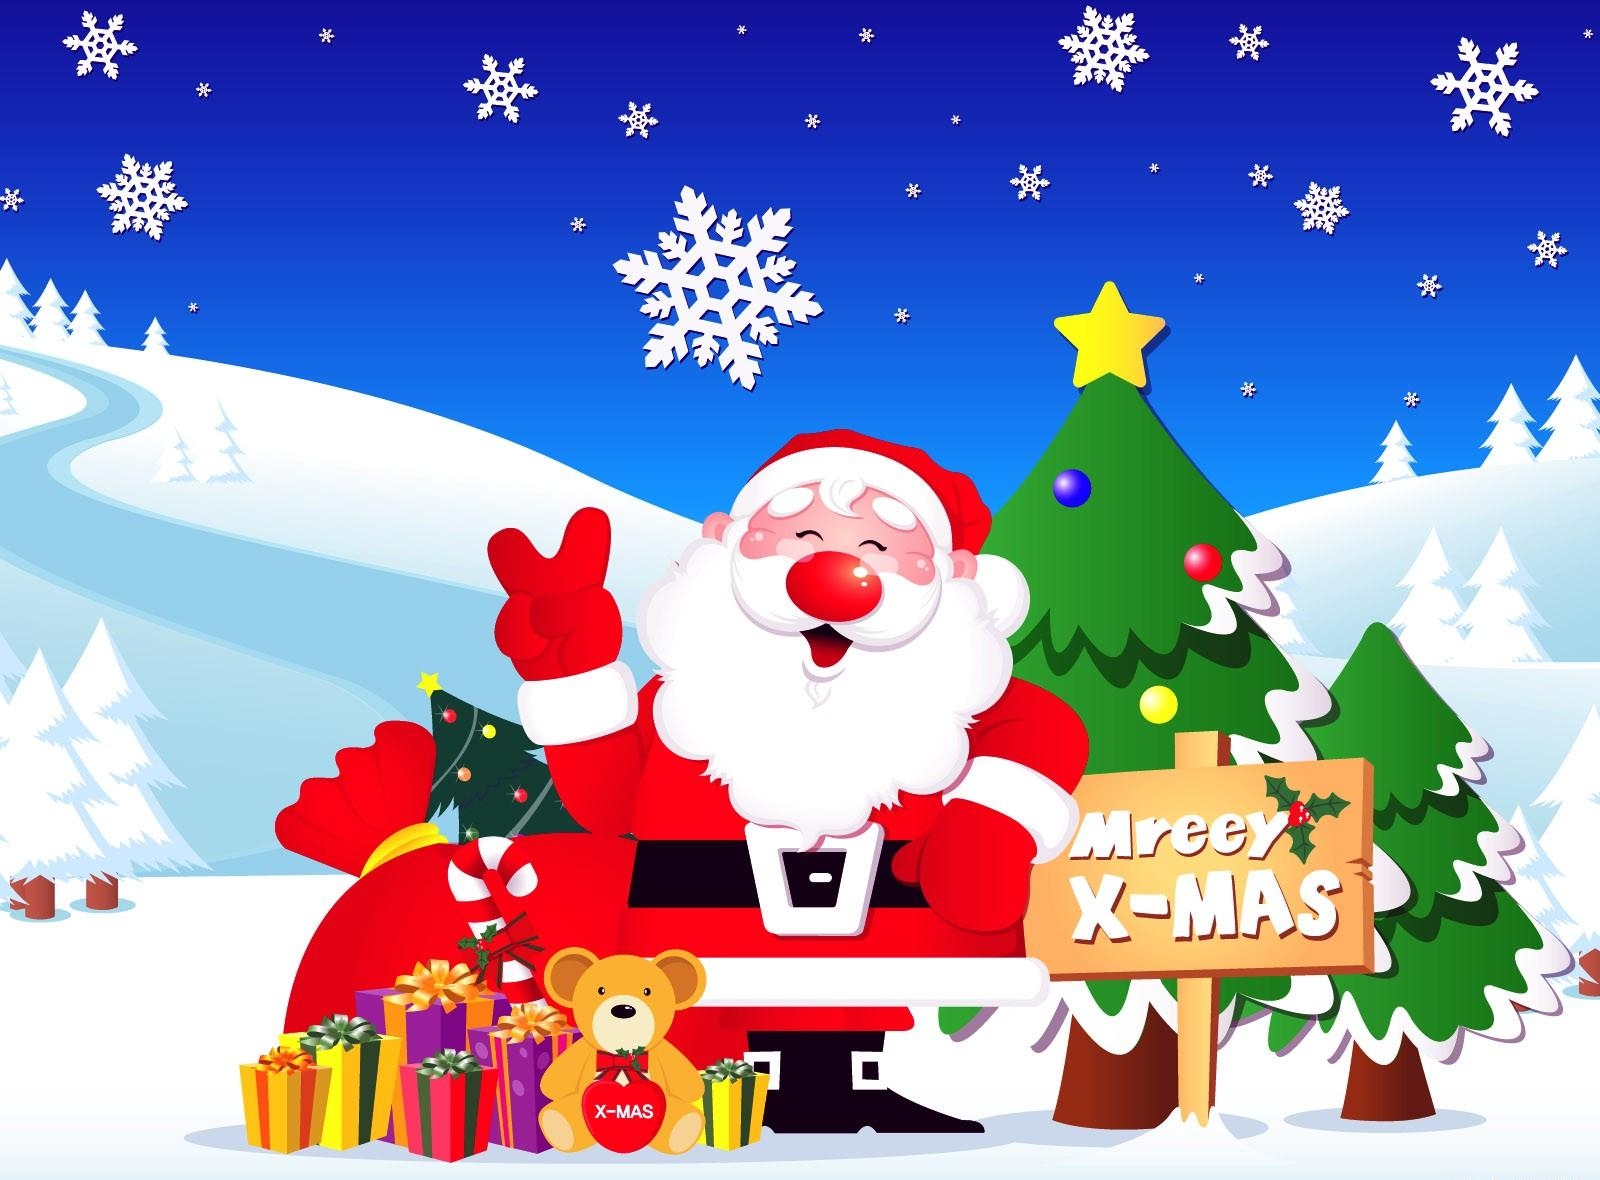 santa claus, presents, holidays, fir trees, snowflakes, road, gifts